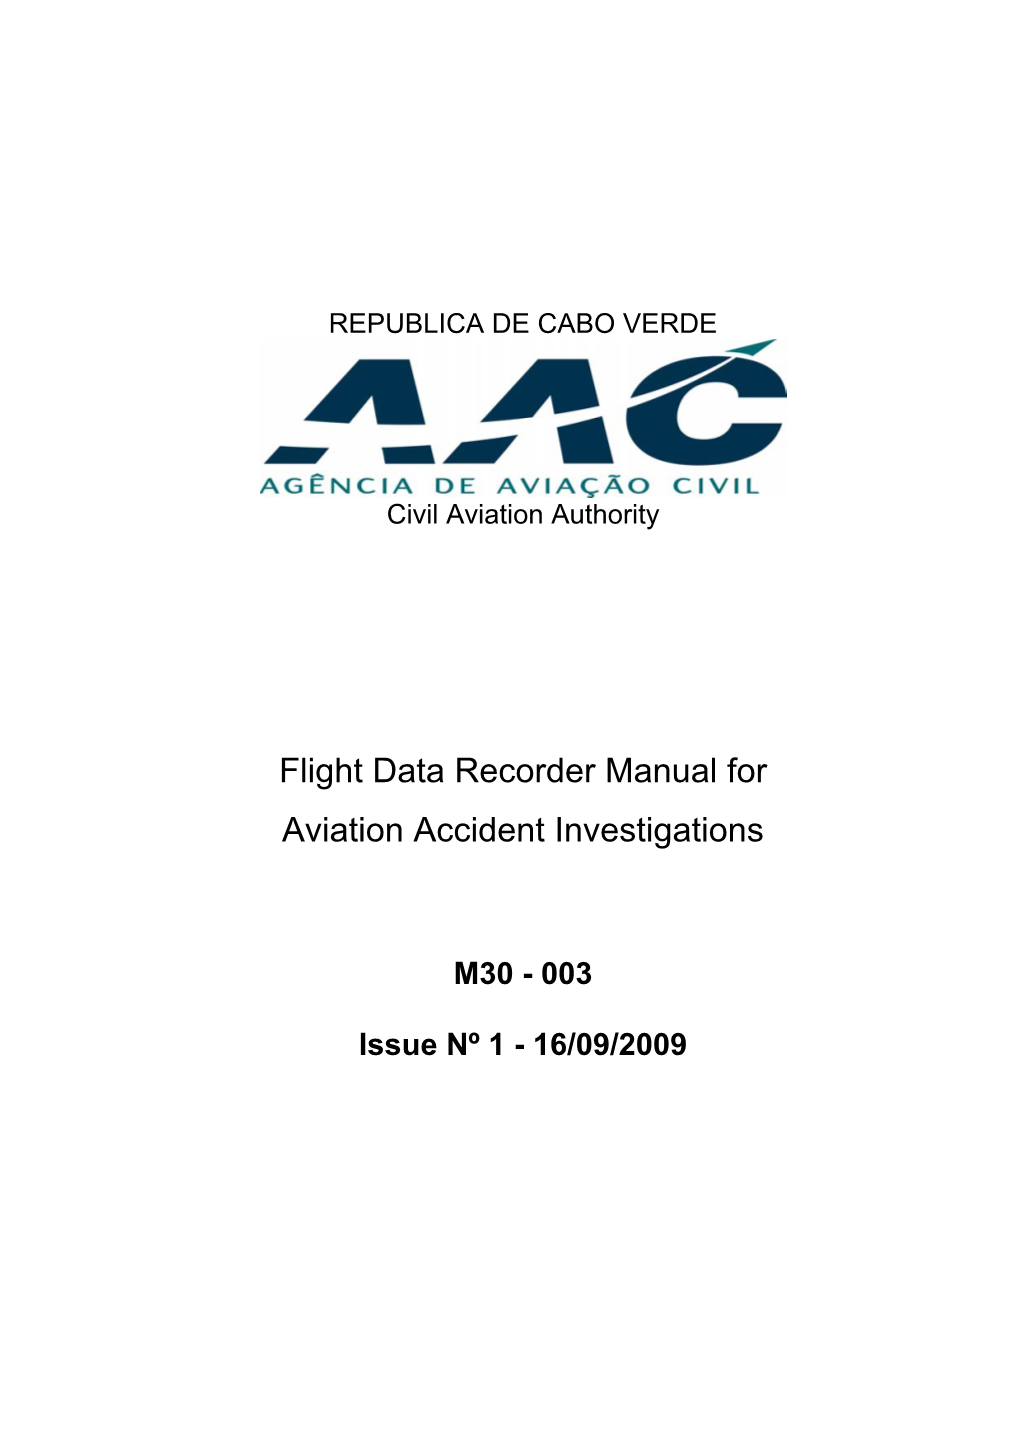 Flight Data Recorder Manual for Aviation Accident Investigations